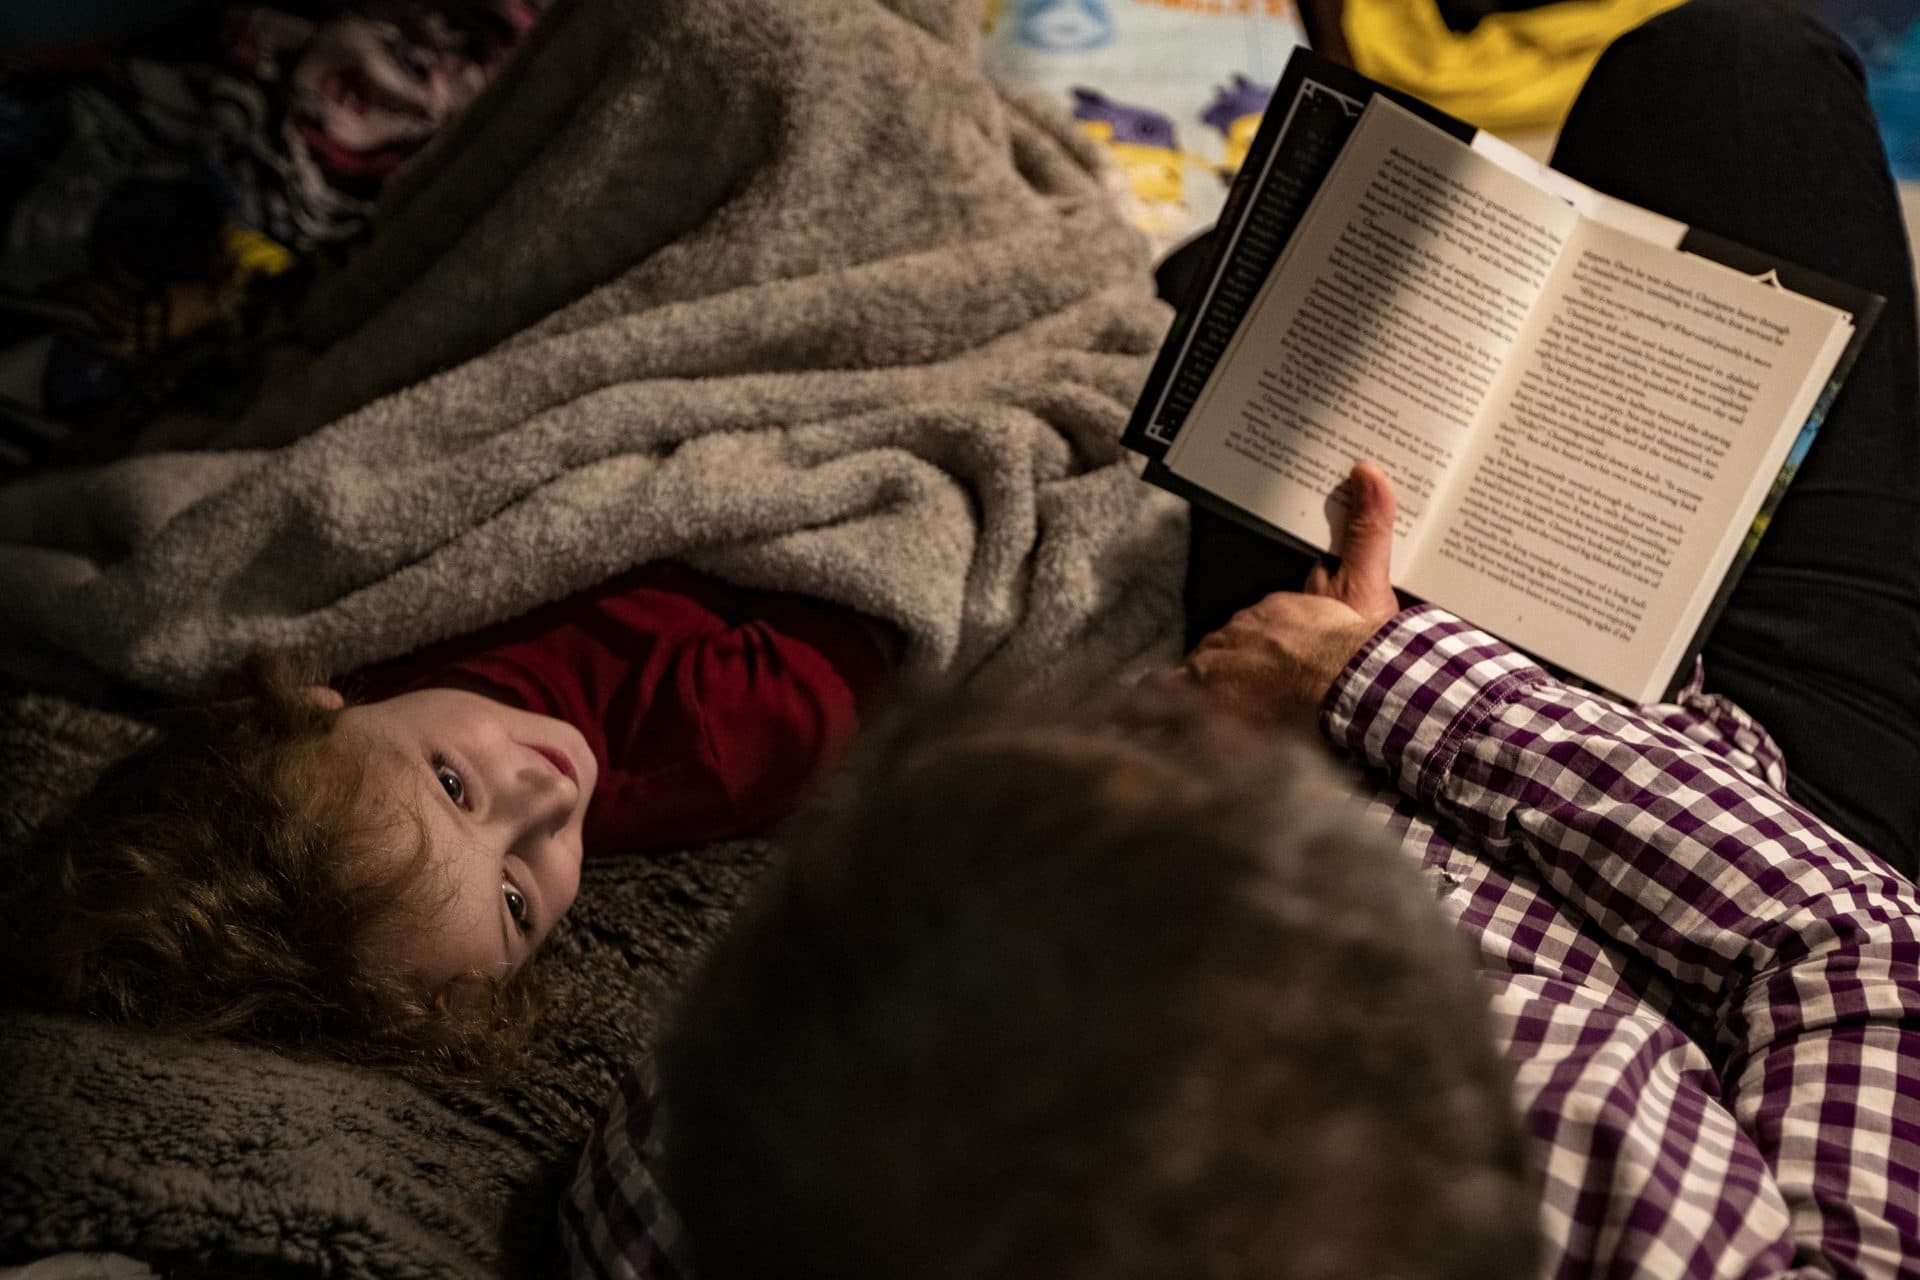 Hallel's father reads them a bedtime story. (Jesse Costa/WBUR)